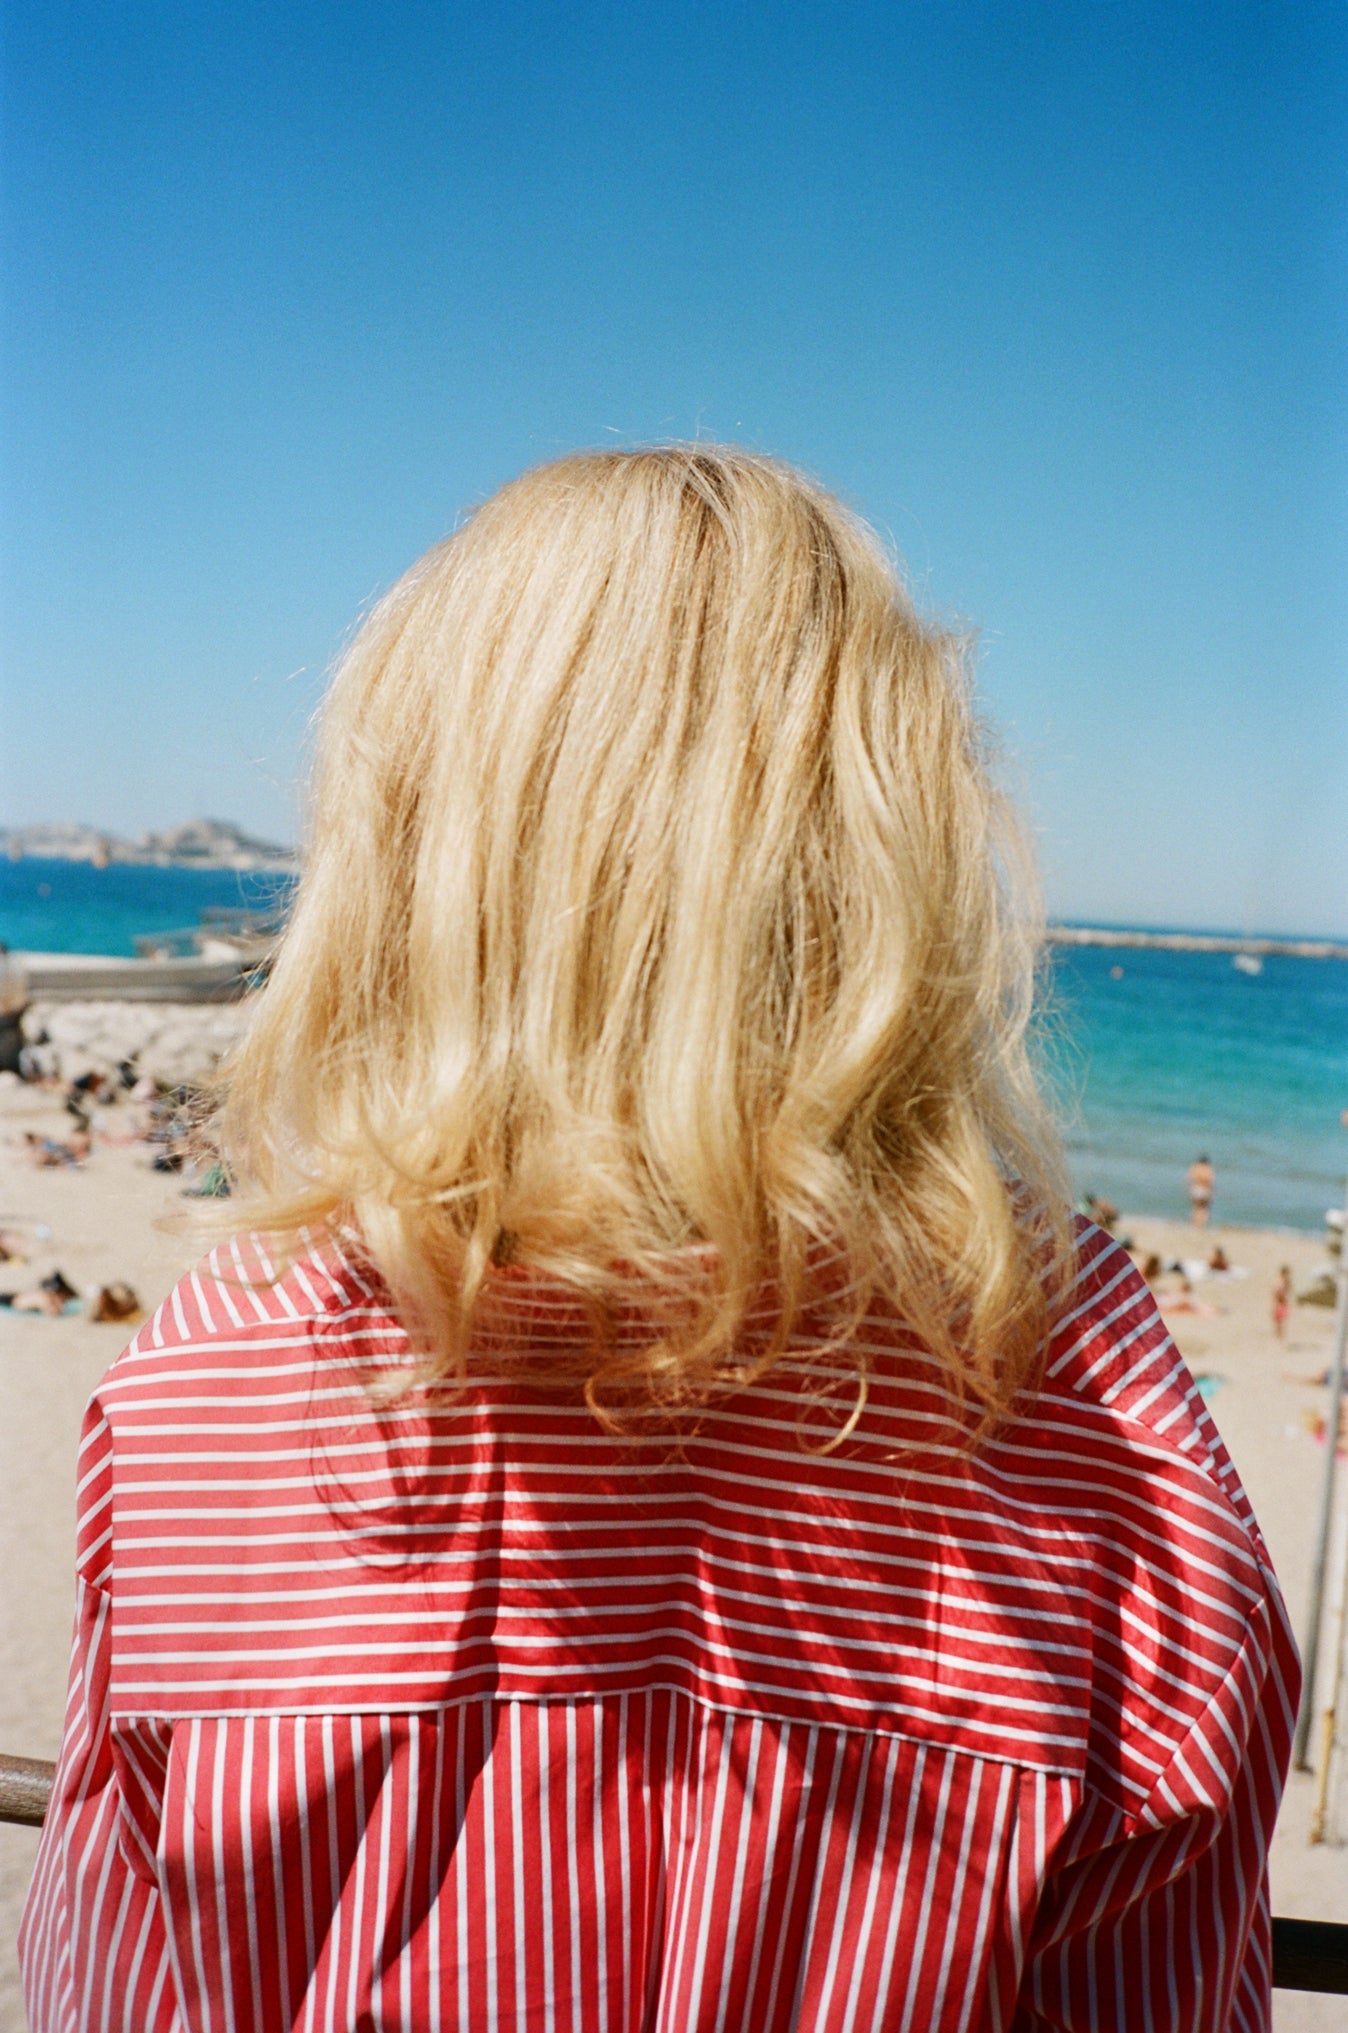 Model Erin Wasson in Marseille wearing the Lui thin stripe shirt 